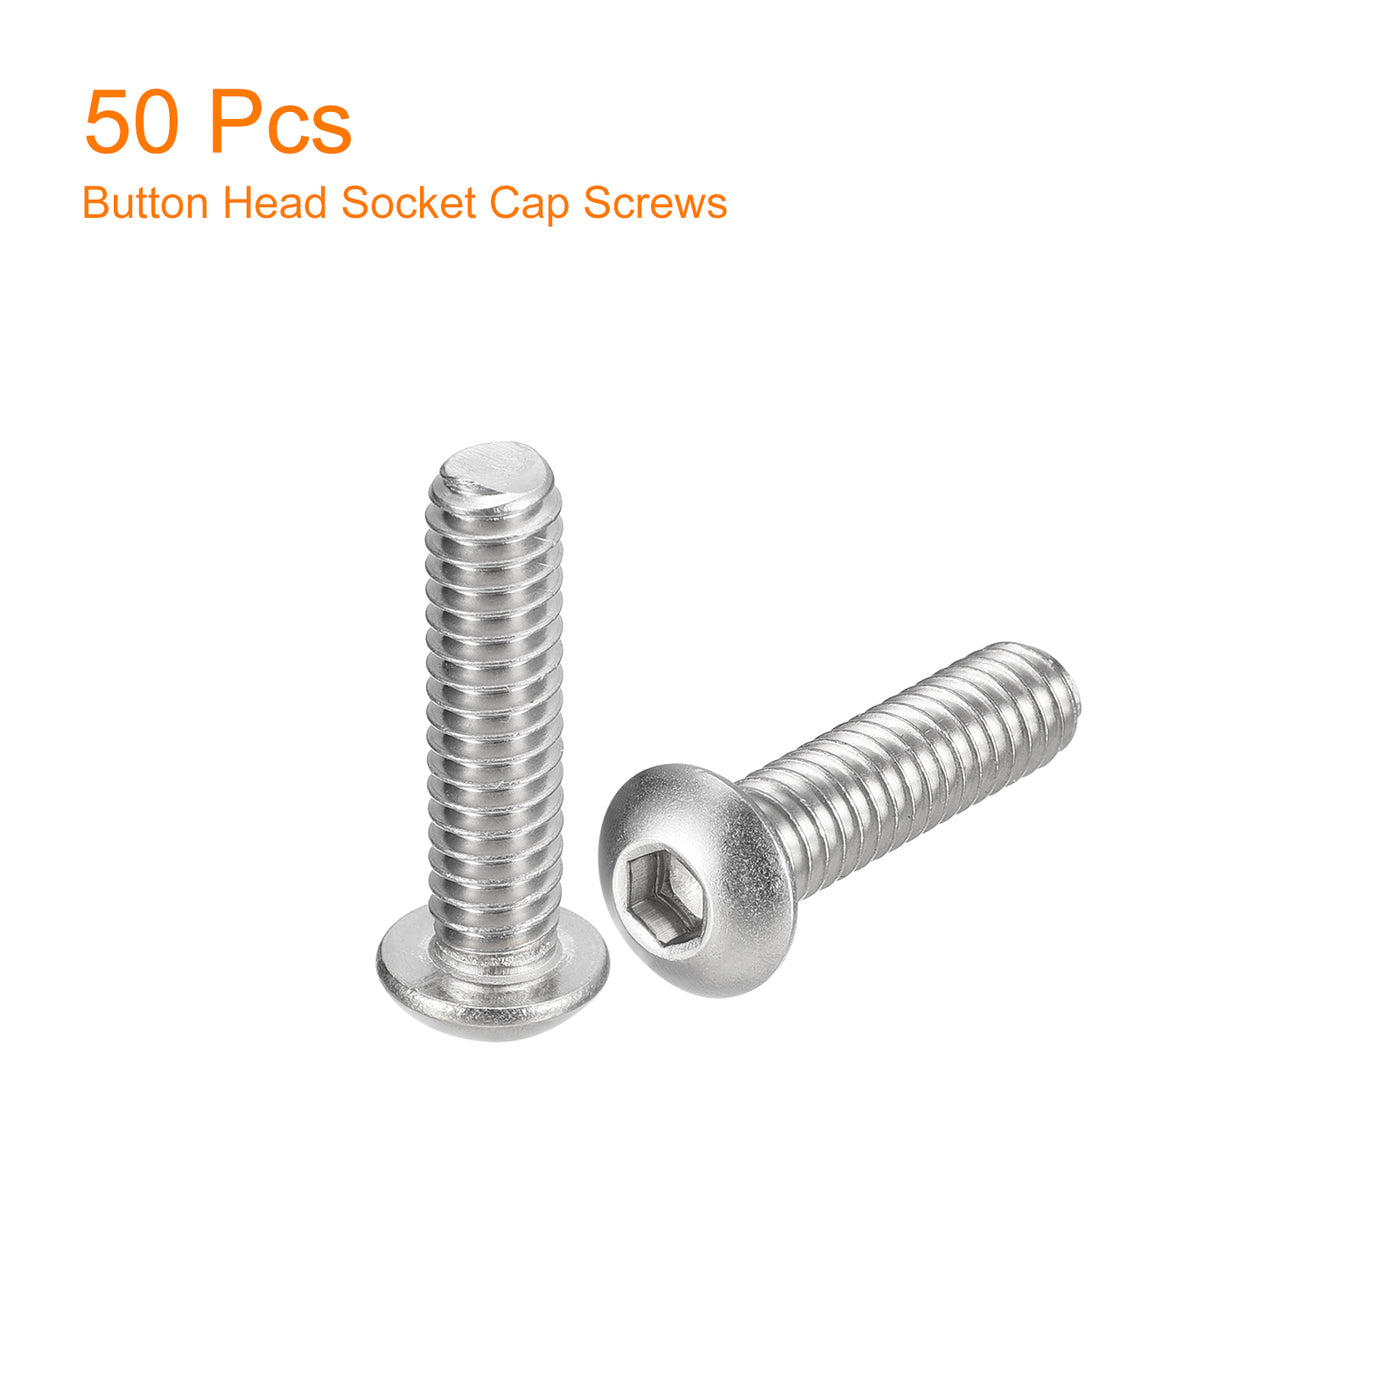 uxcell Uxcell 1/4-20x1" Button Head Socket Cap Screws, 50pcs 304 Stainless Steel Screws